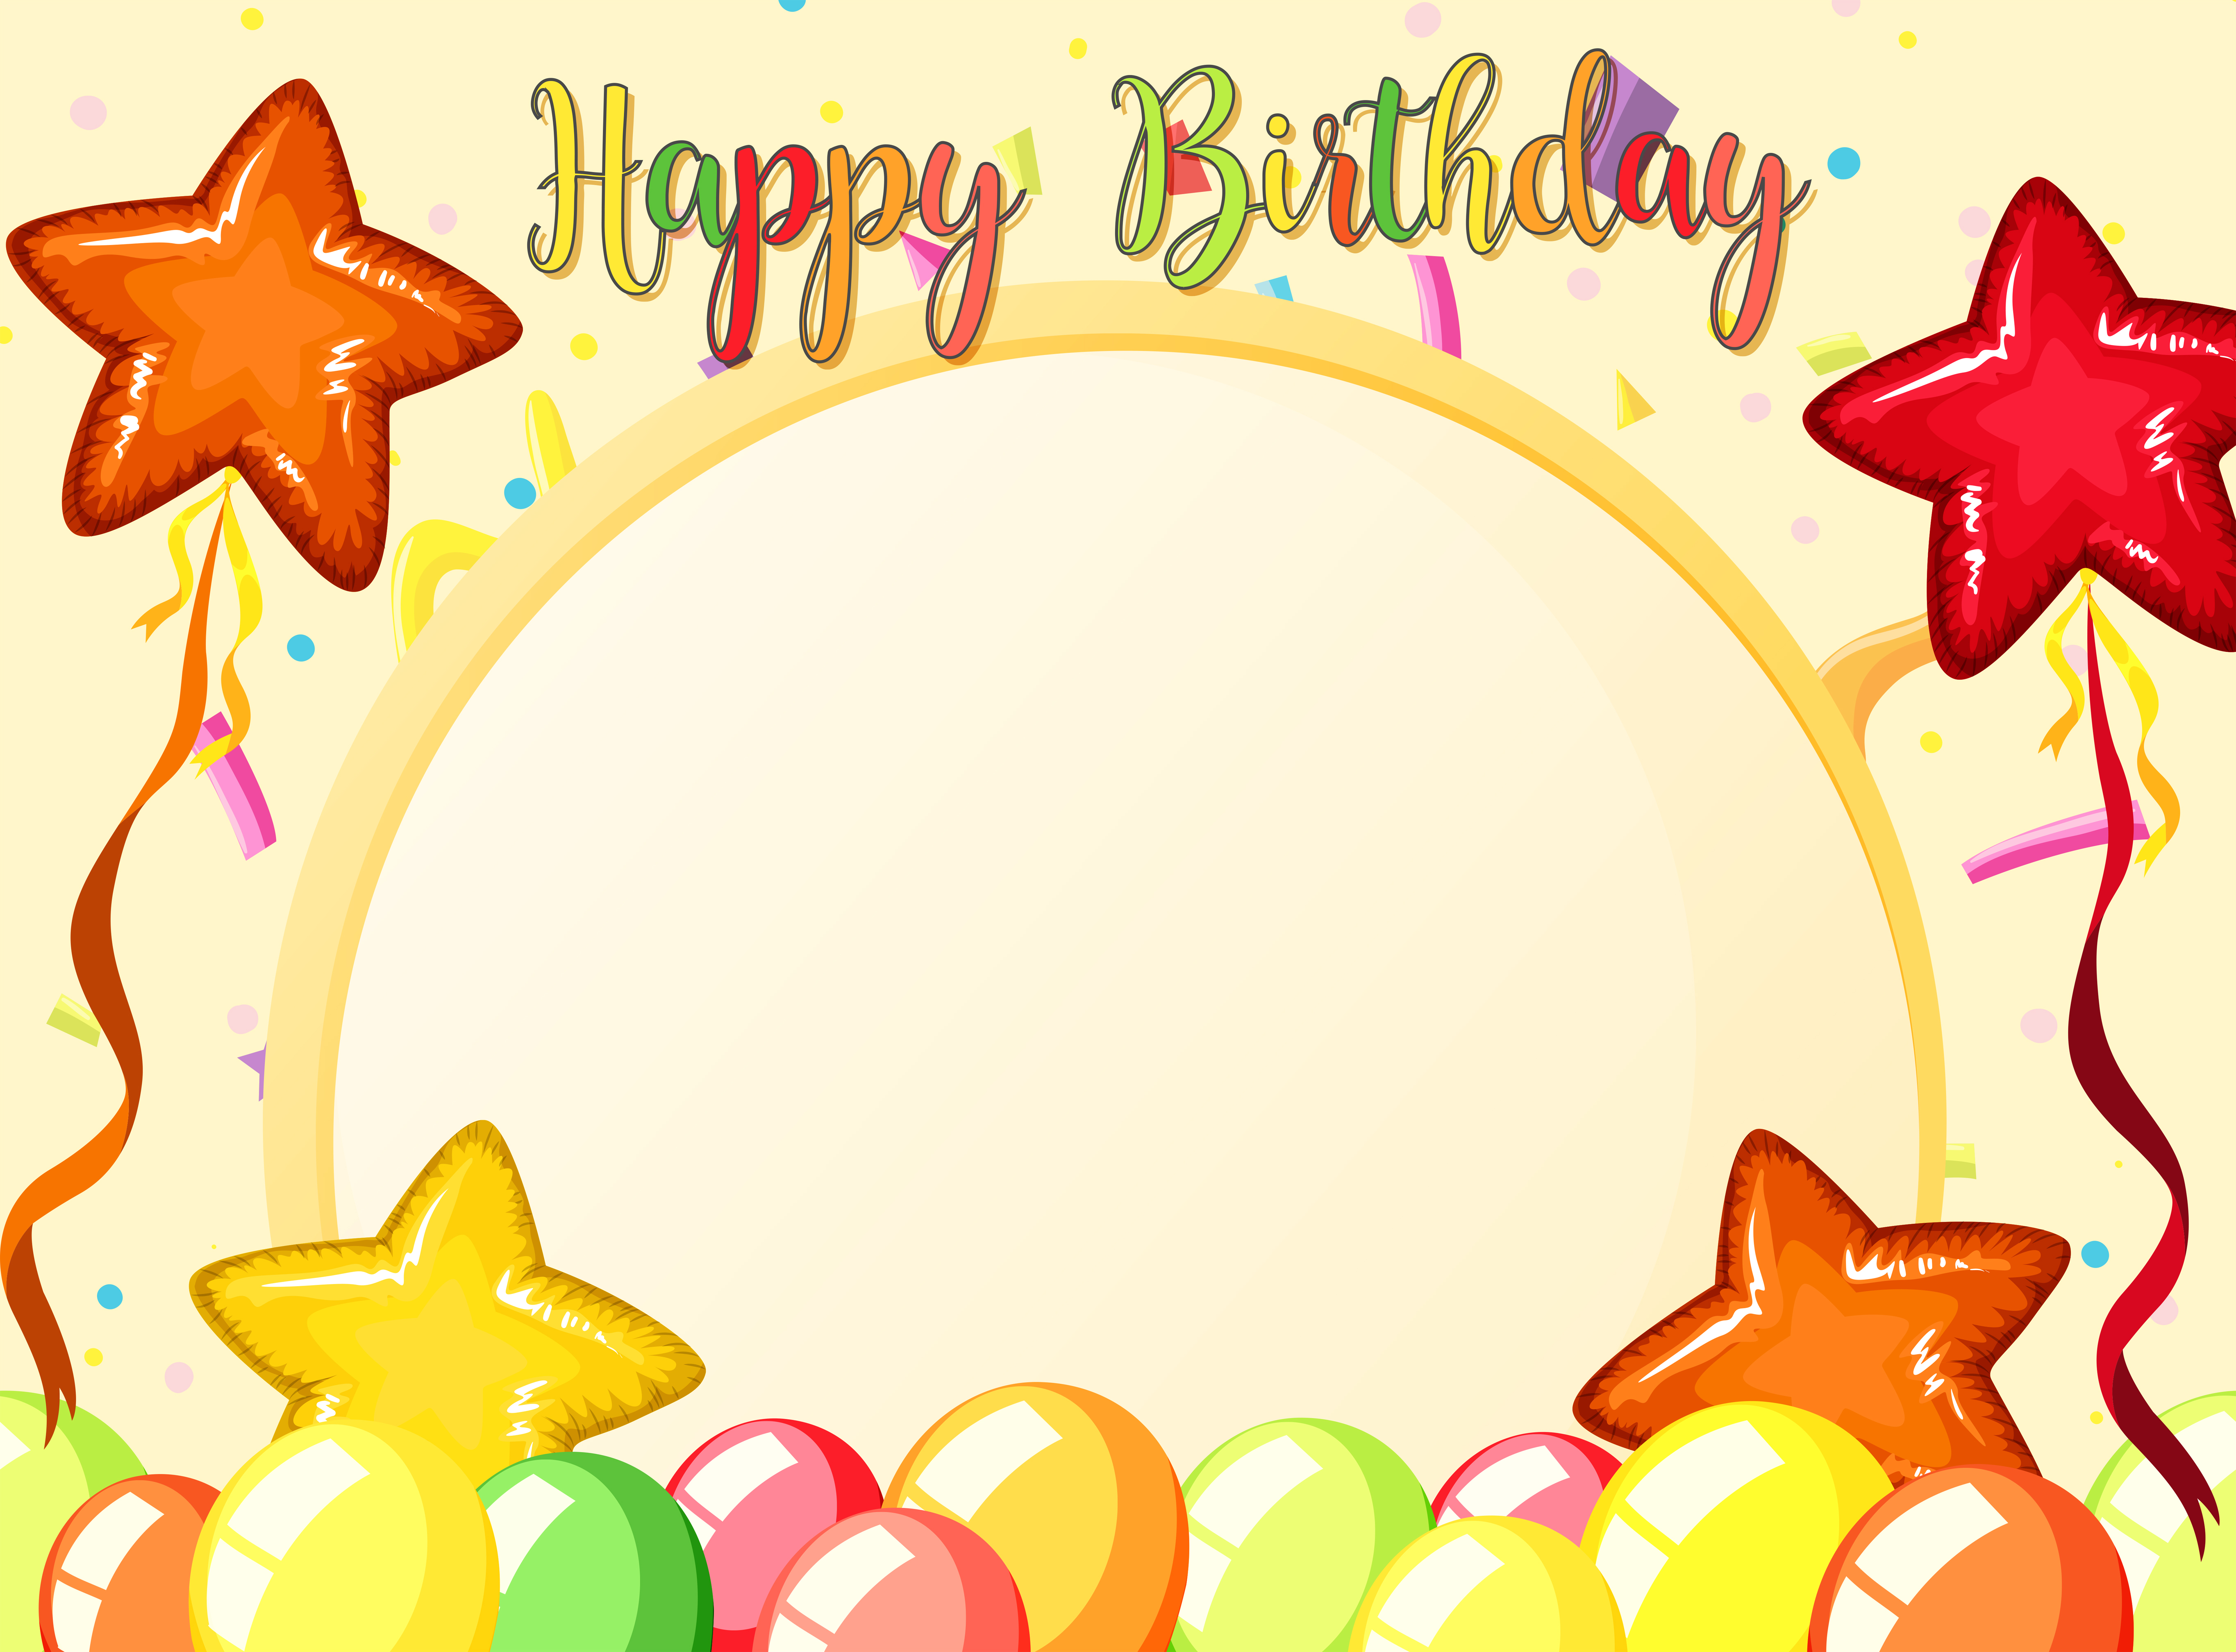 Download Happy birthday card template - Download Free Vectors ...